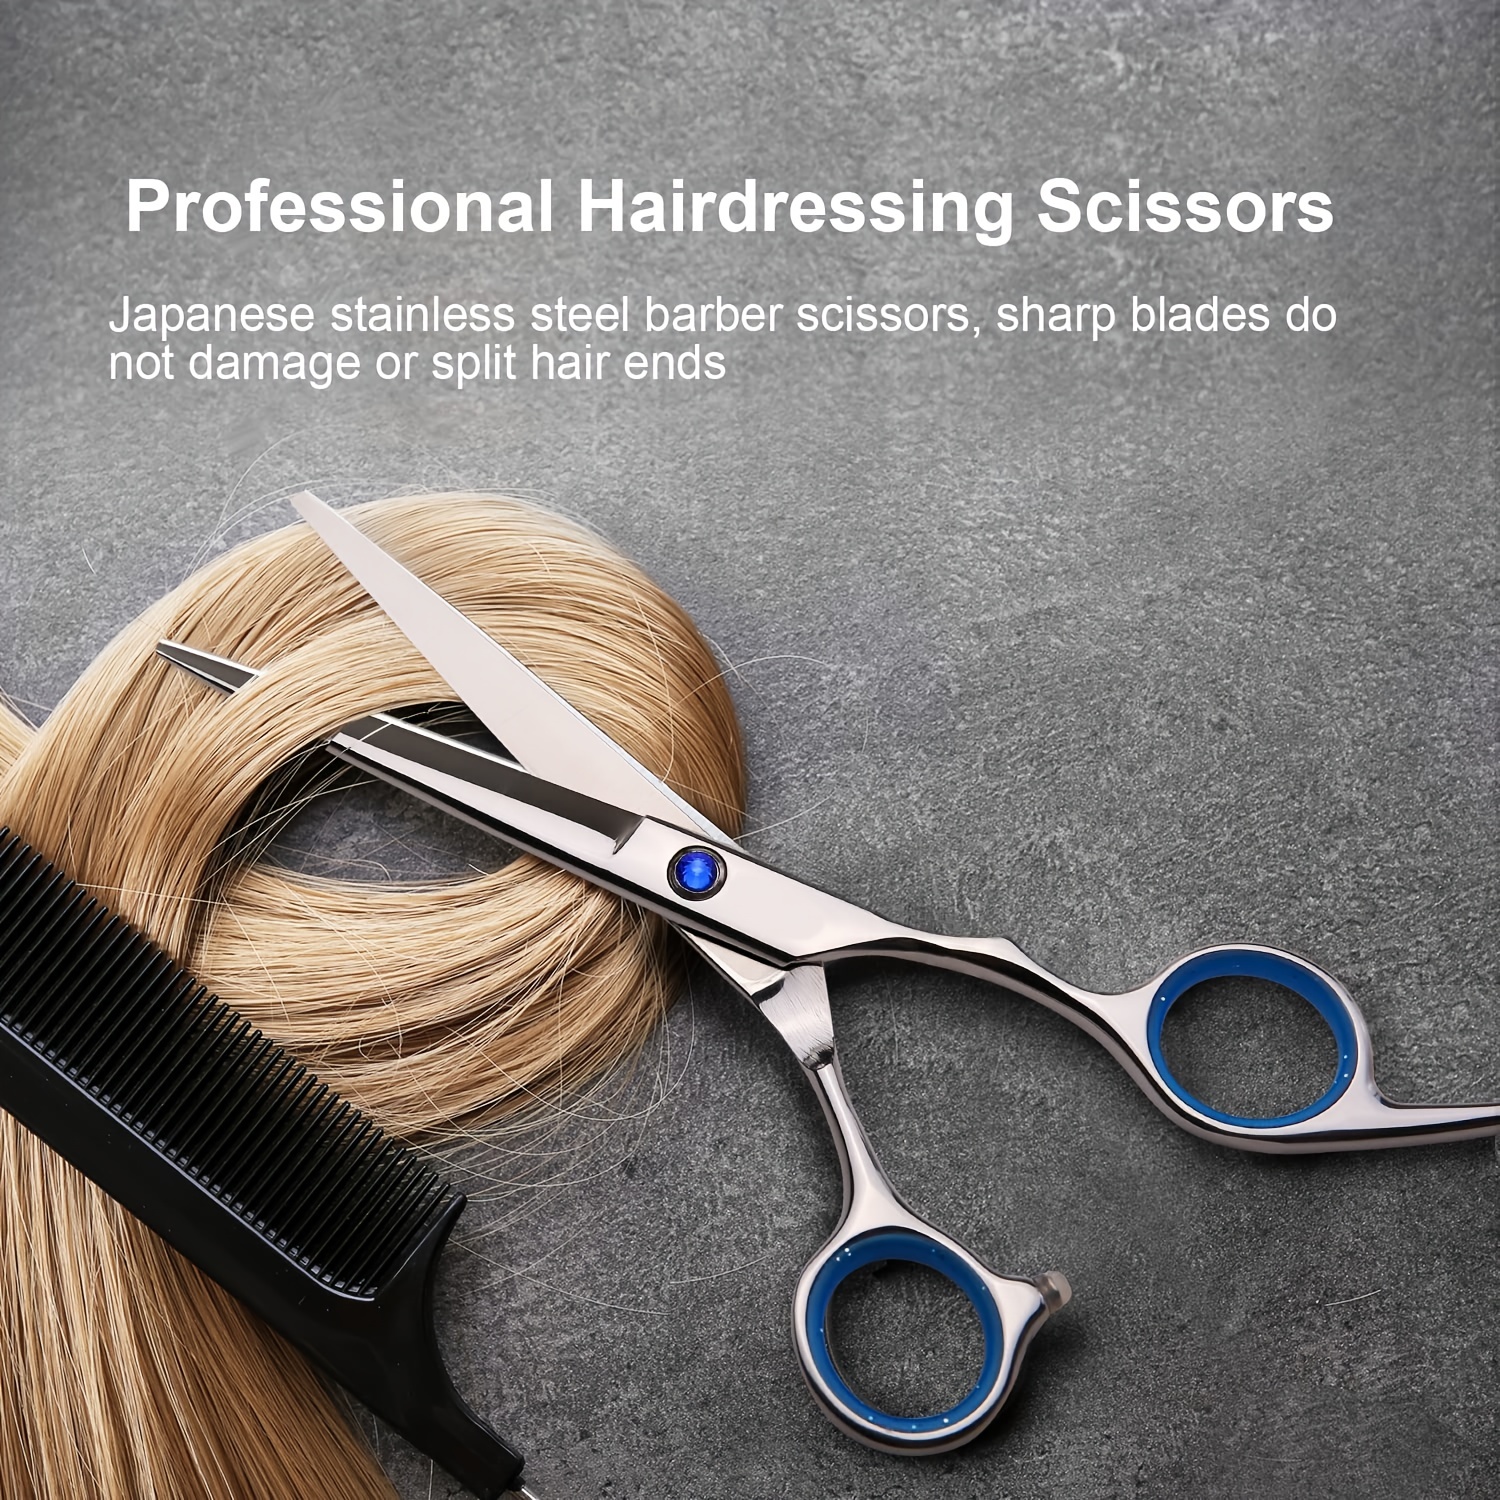 PROFESSIONAL HAIR CUTTING HAIRDRESSER SCISSORS/SHEARS RAZOR EDGE SHARP (5  INCH)